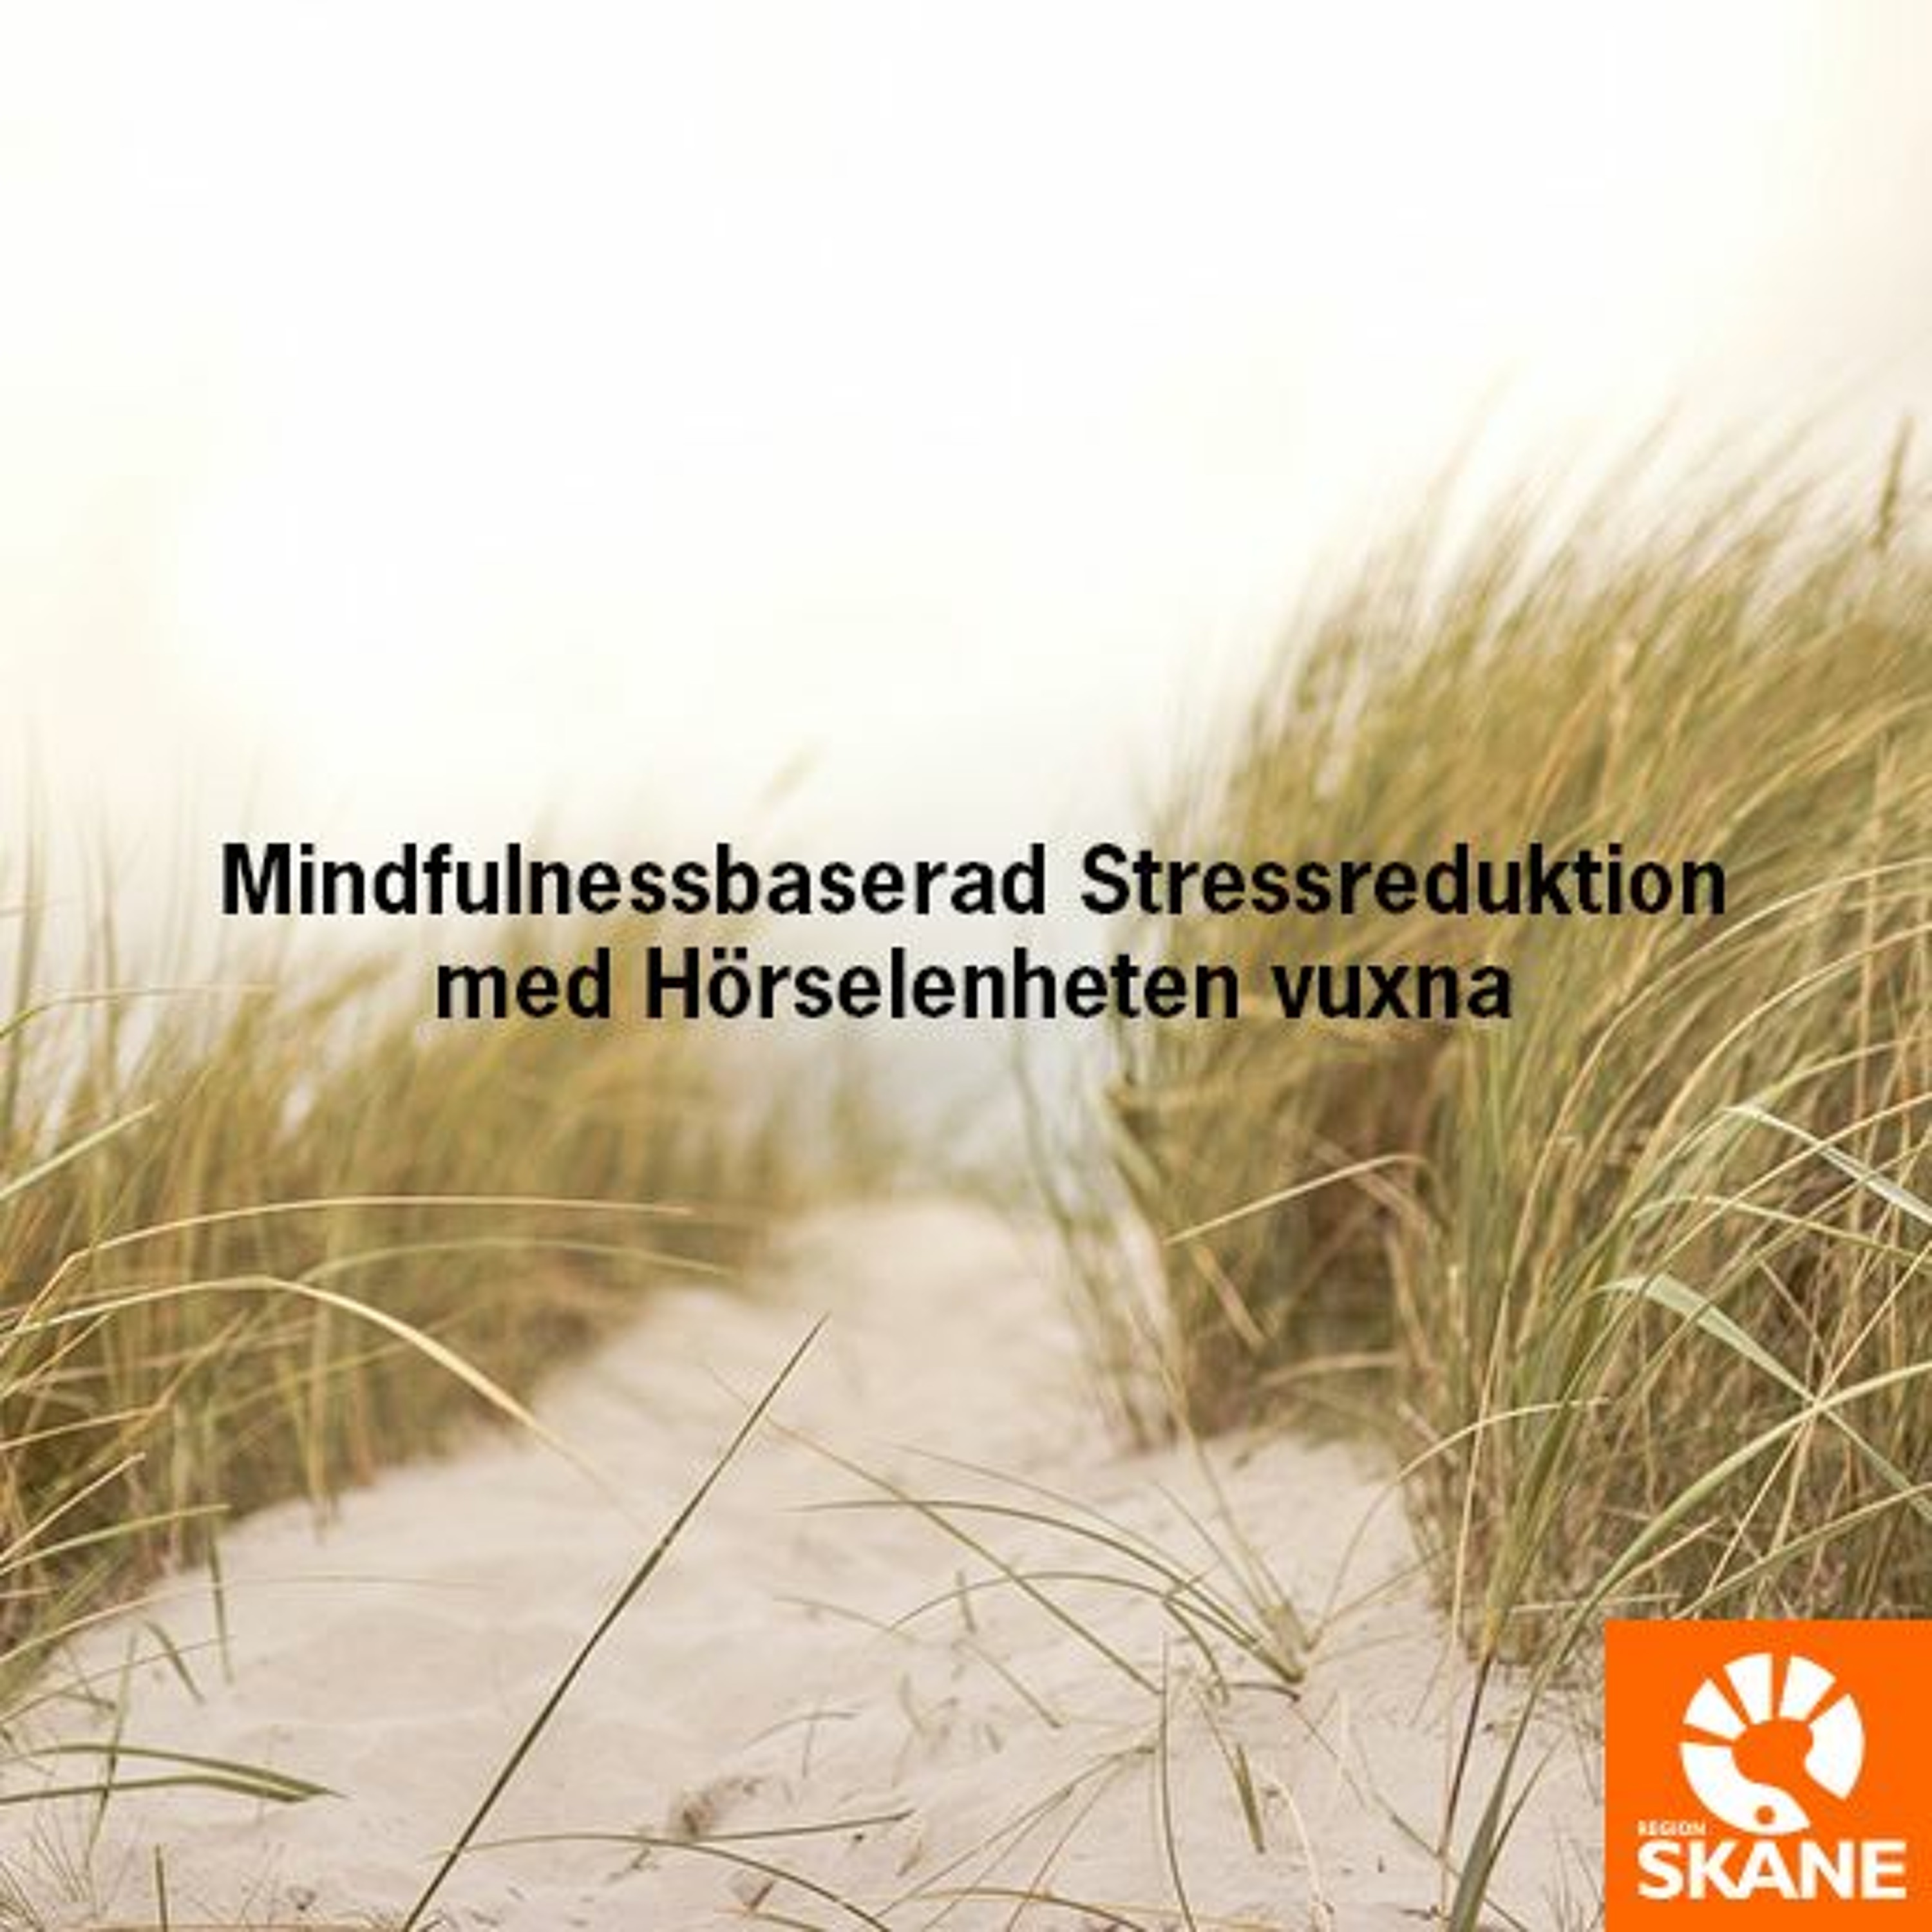 Mindfulnessbaserad Stressreduktion - Tyst meditation